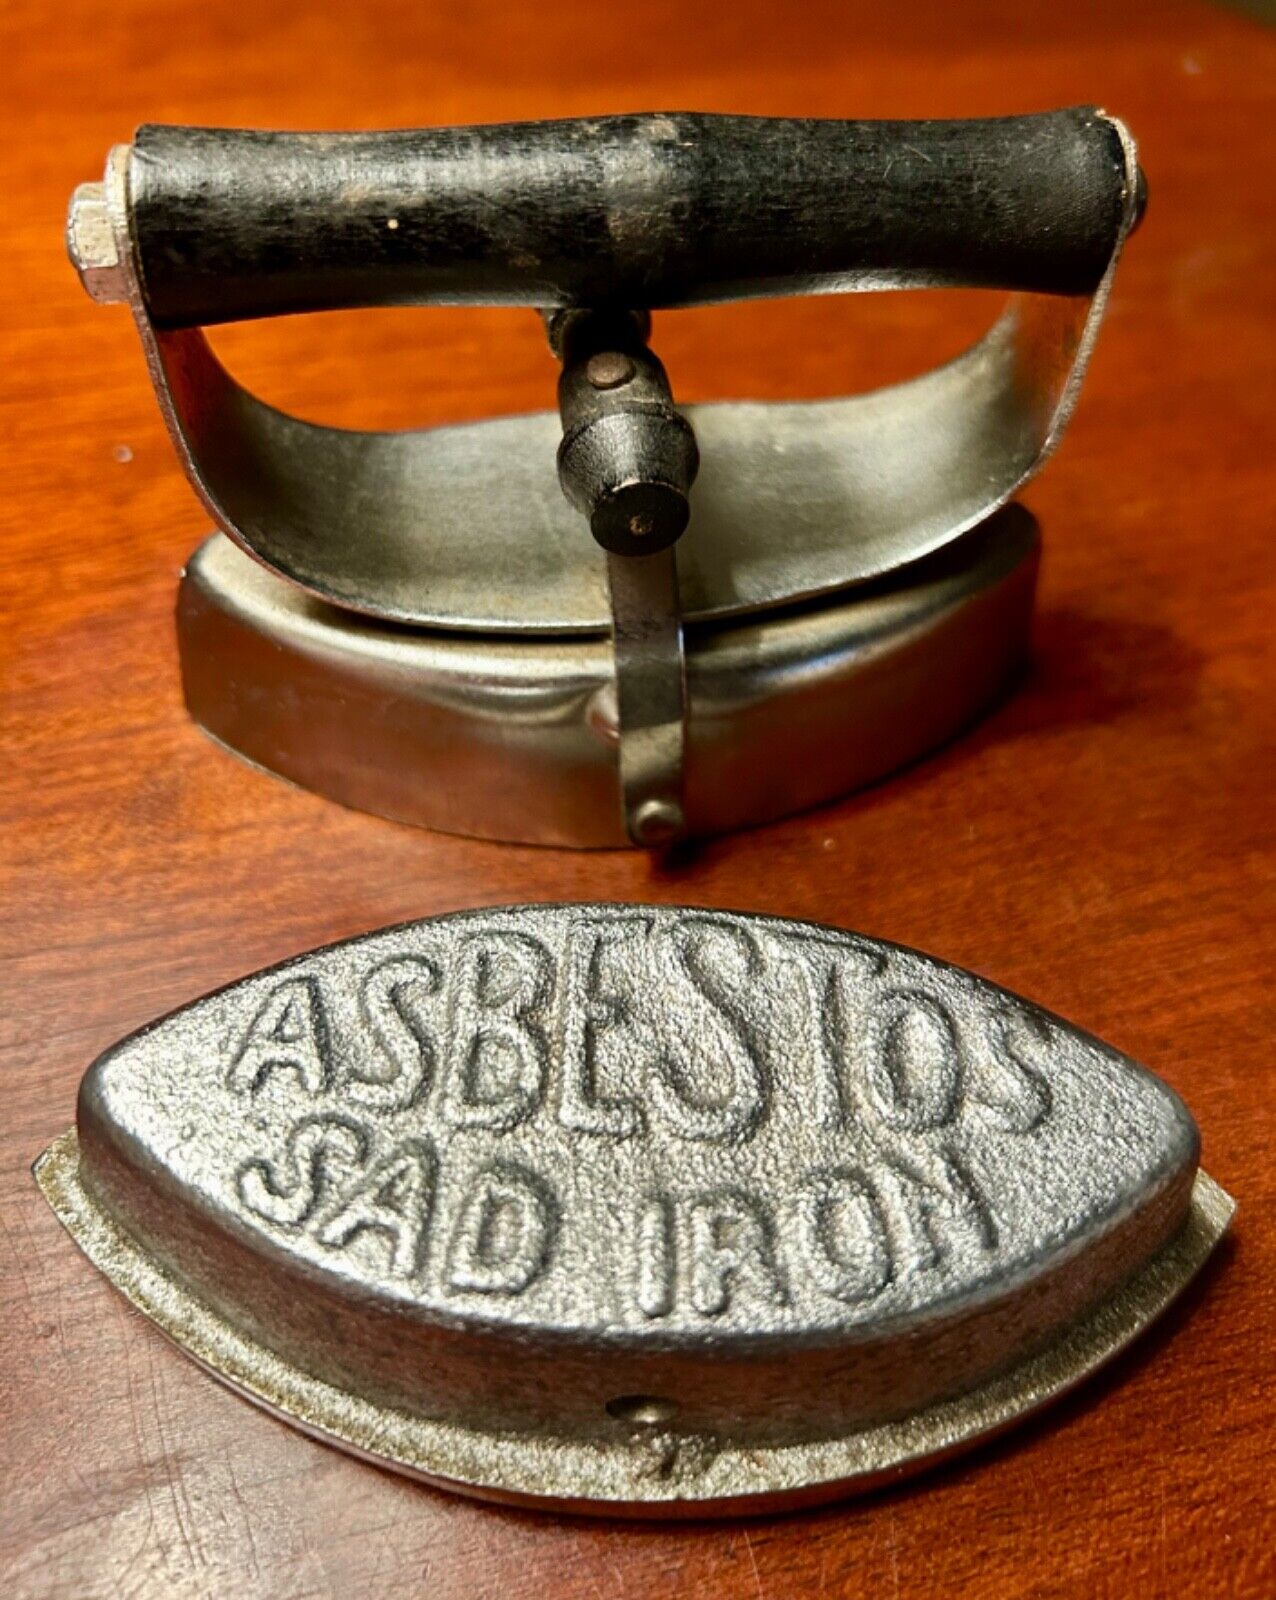 Child's Toy Sad Iron Asbestos Sad Iron Antique 4”